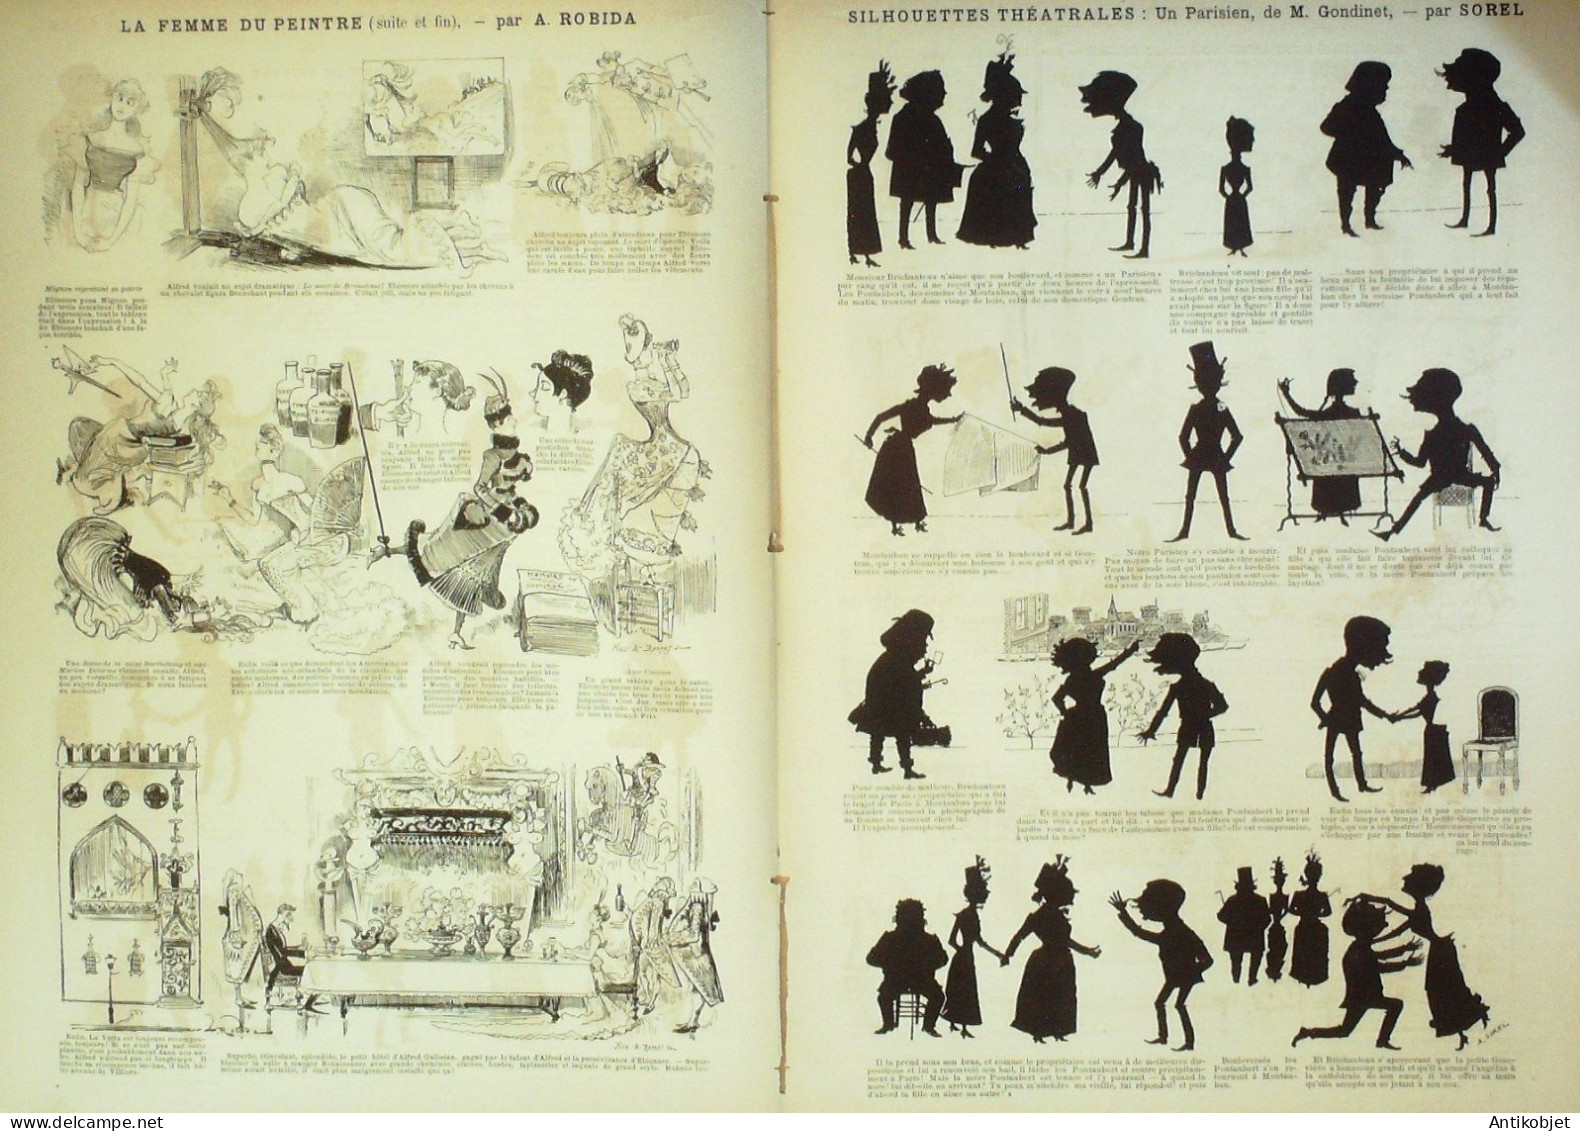 La Caricature 1886 N°320 Femme Du Peintre Robida Silhouettes Sorel Concierge Draner - Riviste - Ante 1900